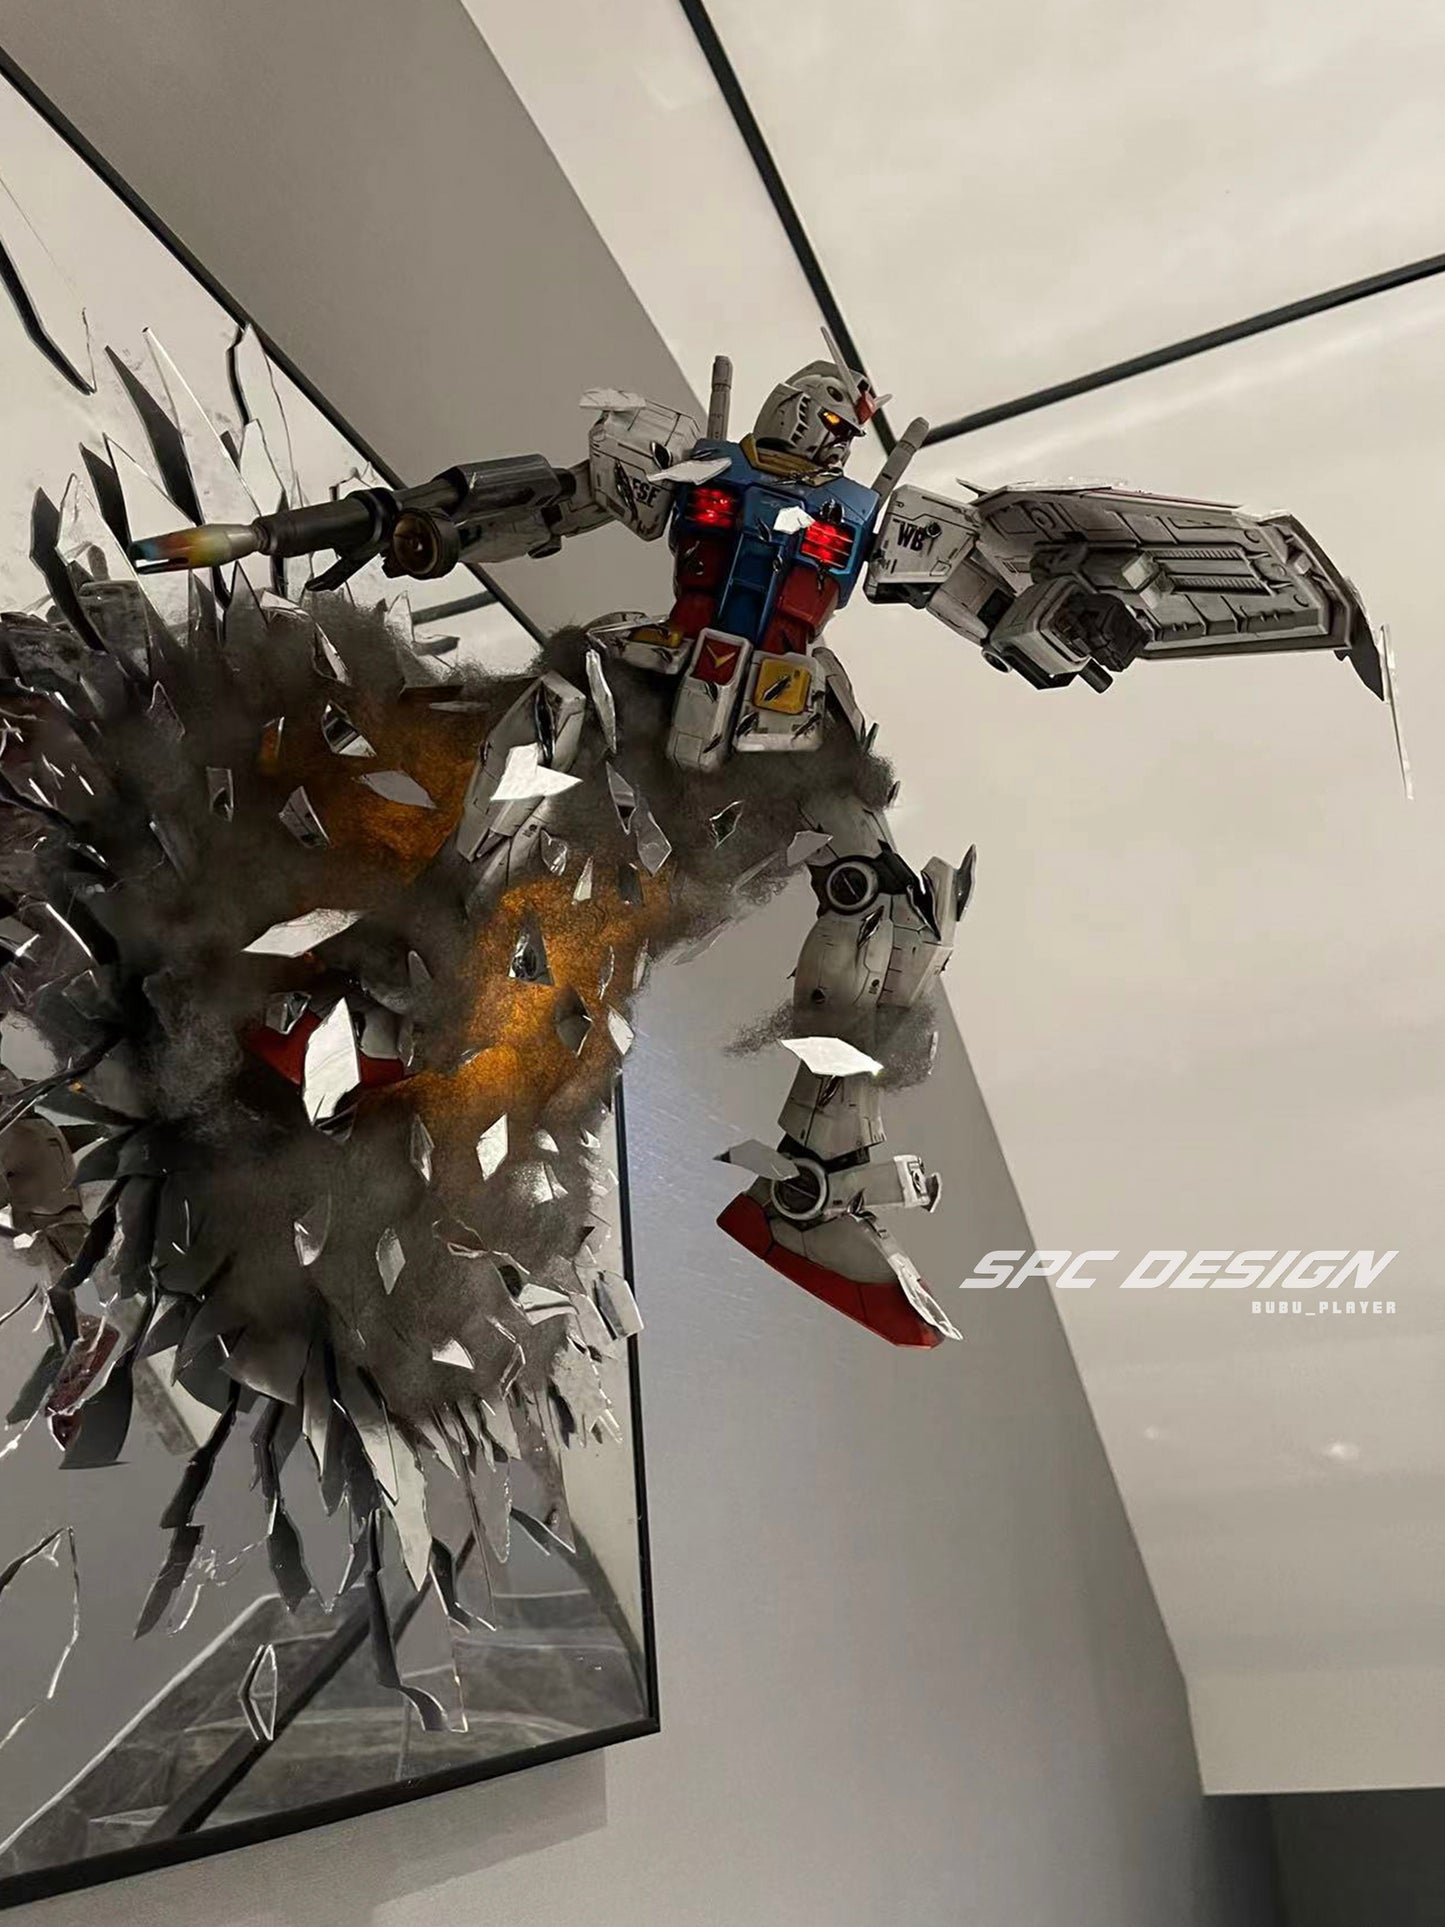 RX-78 Gundam with Broken Mirror or plat form